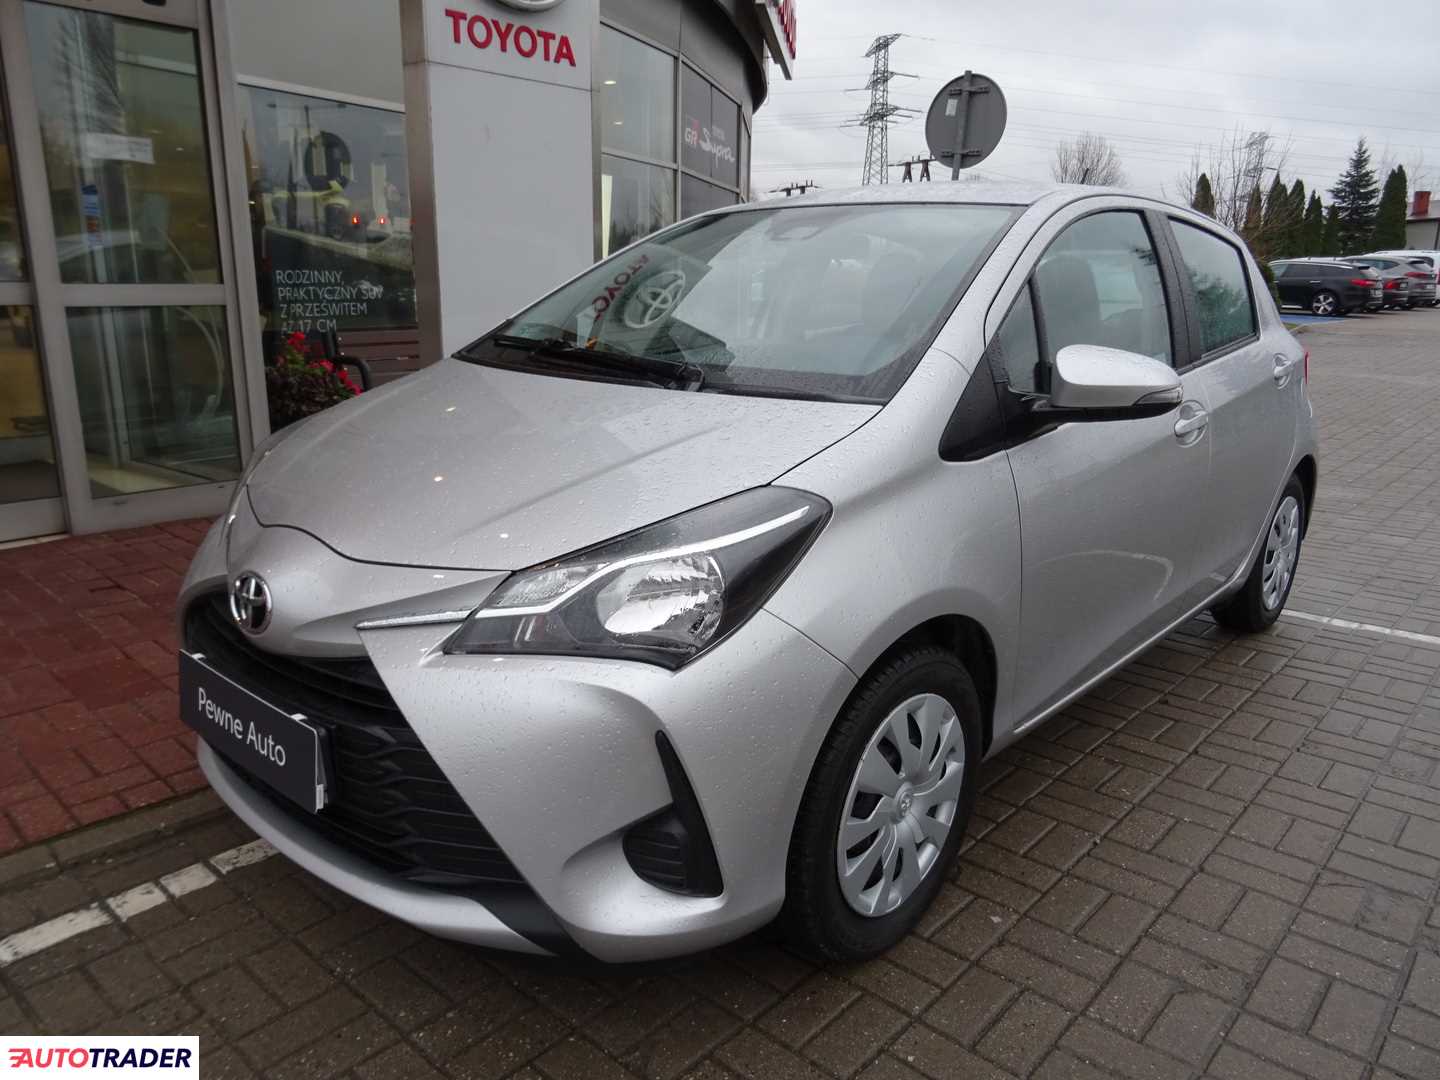 Toyota Yaris 2019 1.0 72 KM